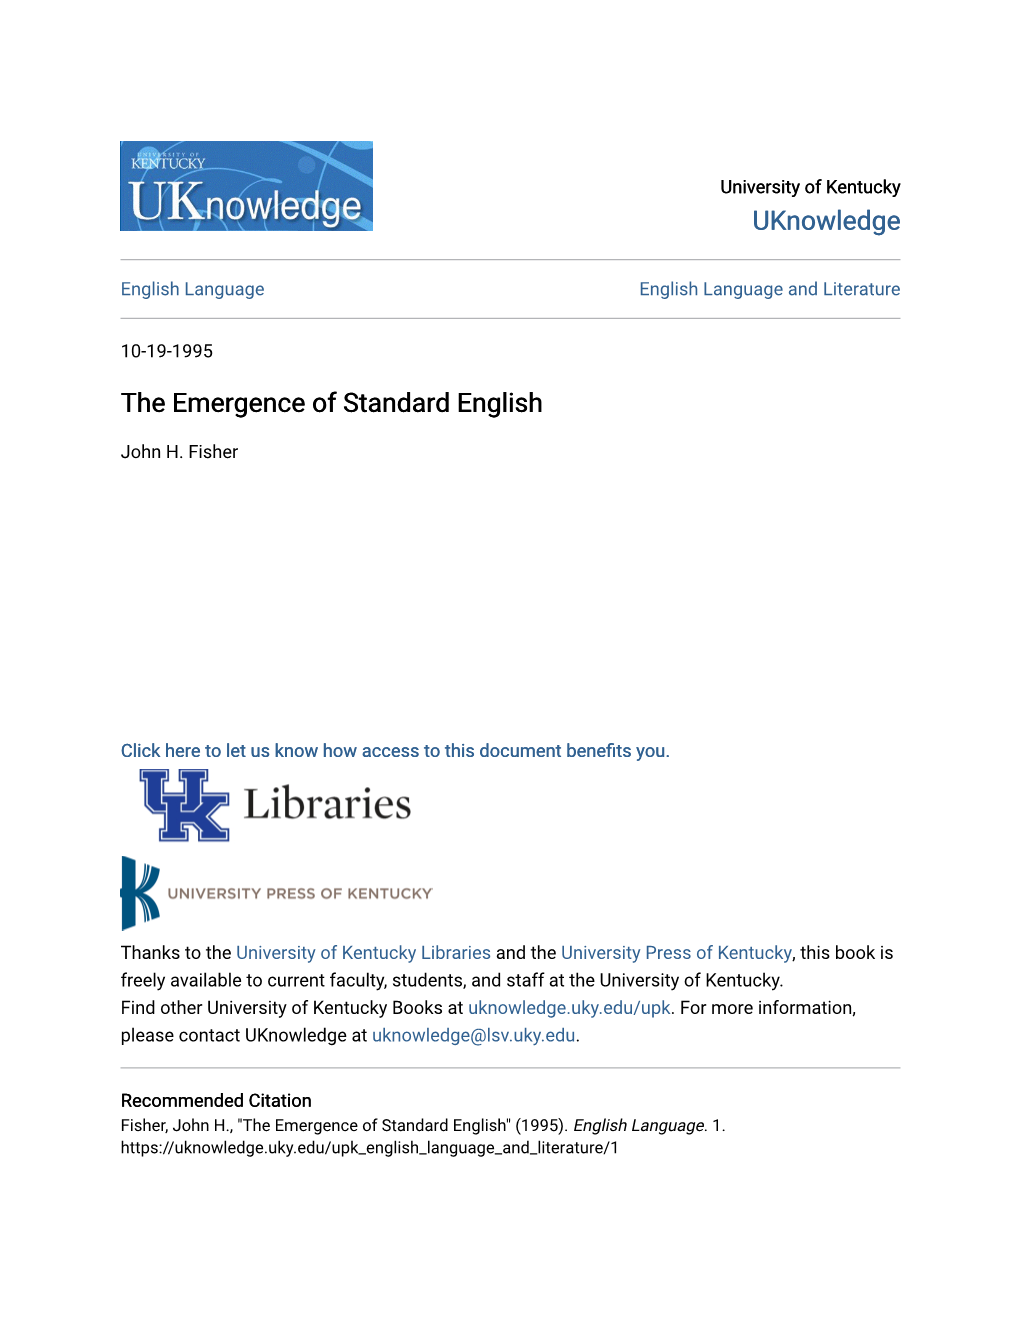 The Emergence of Standard English